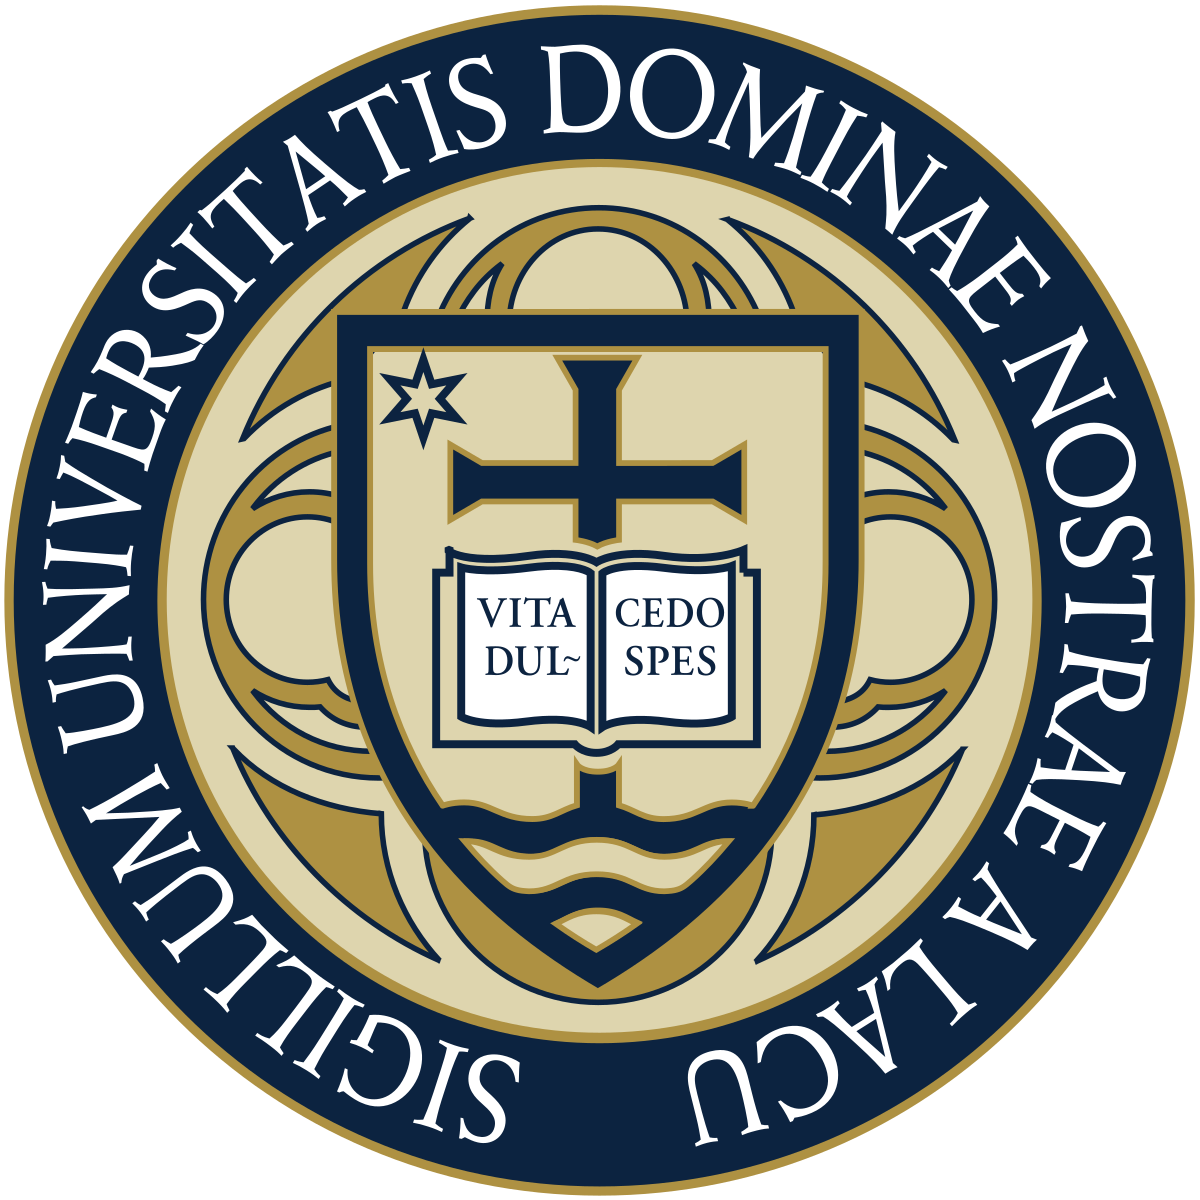 University of Notre Dame - Wikipedia